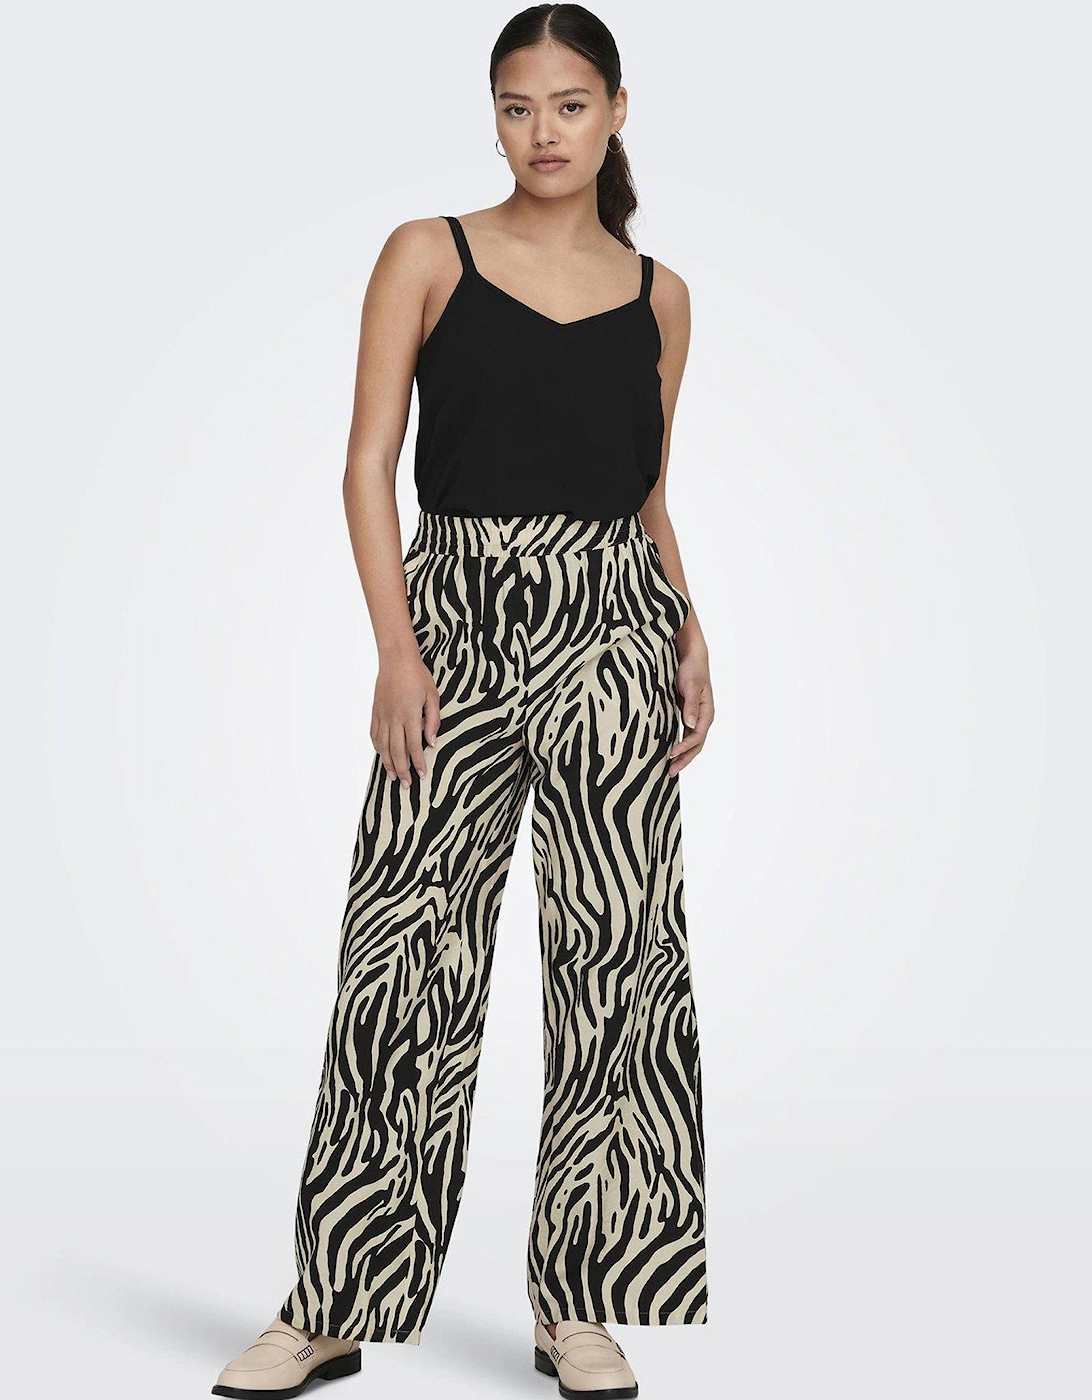 Zebra Print Wide Leg Trousers - Black/White